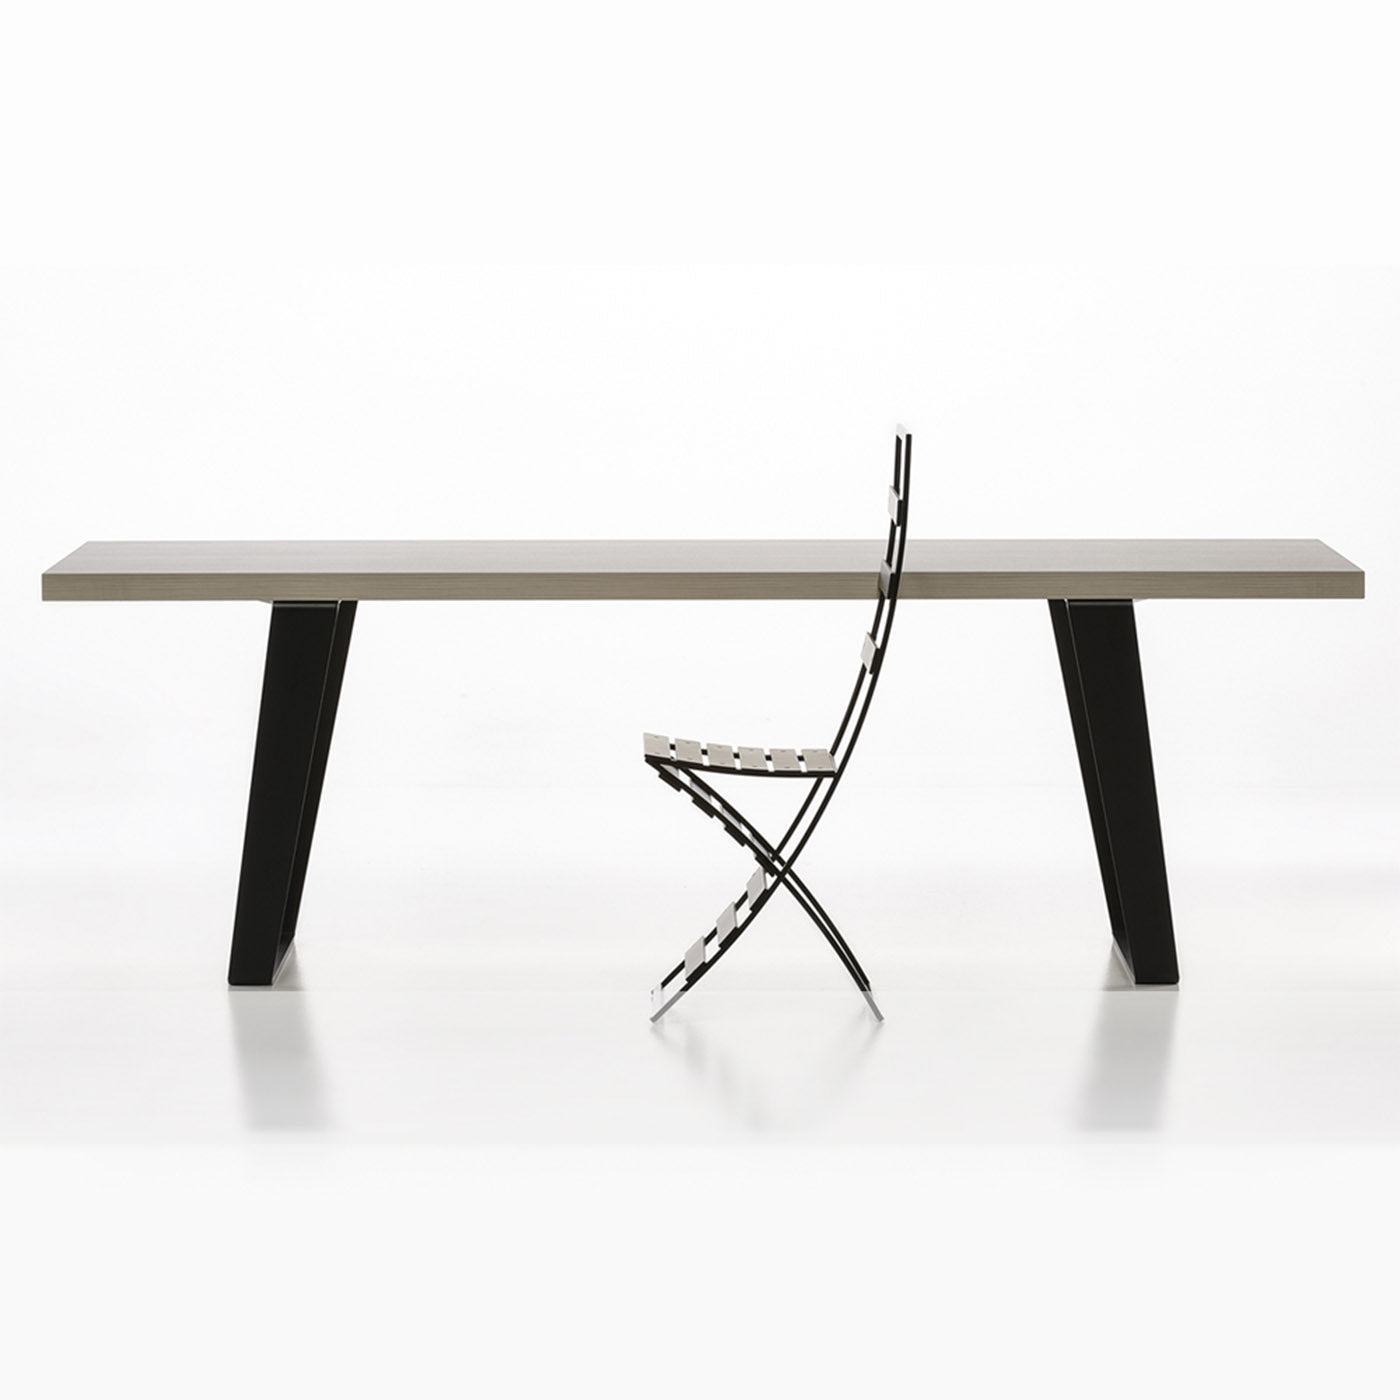 Japan Rectangular Steel Table by Franco Poli - Alternative view 3